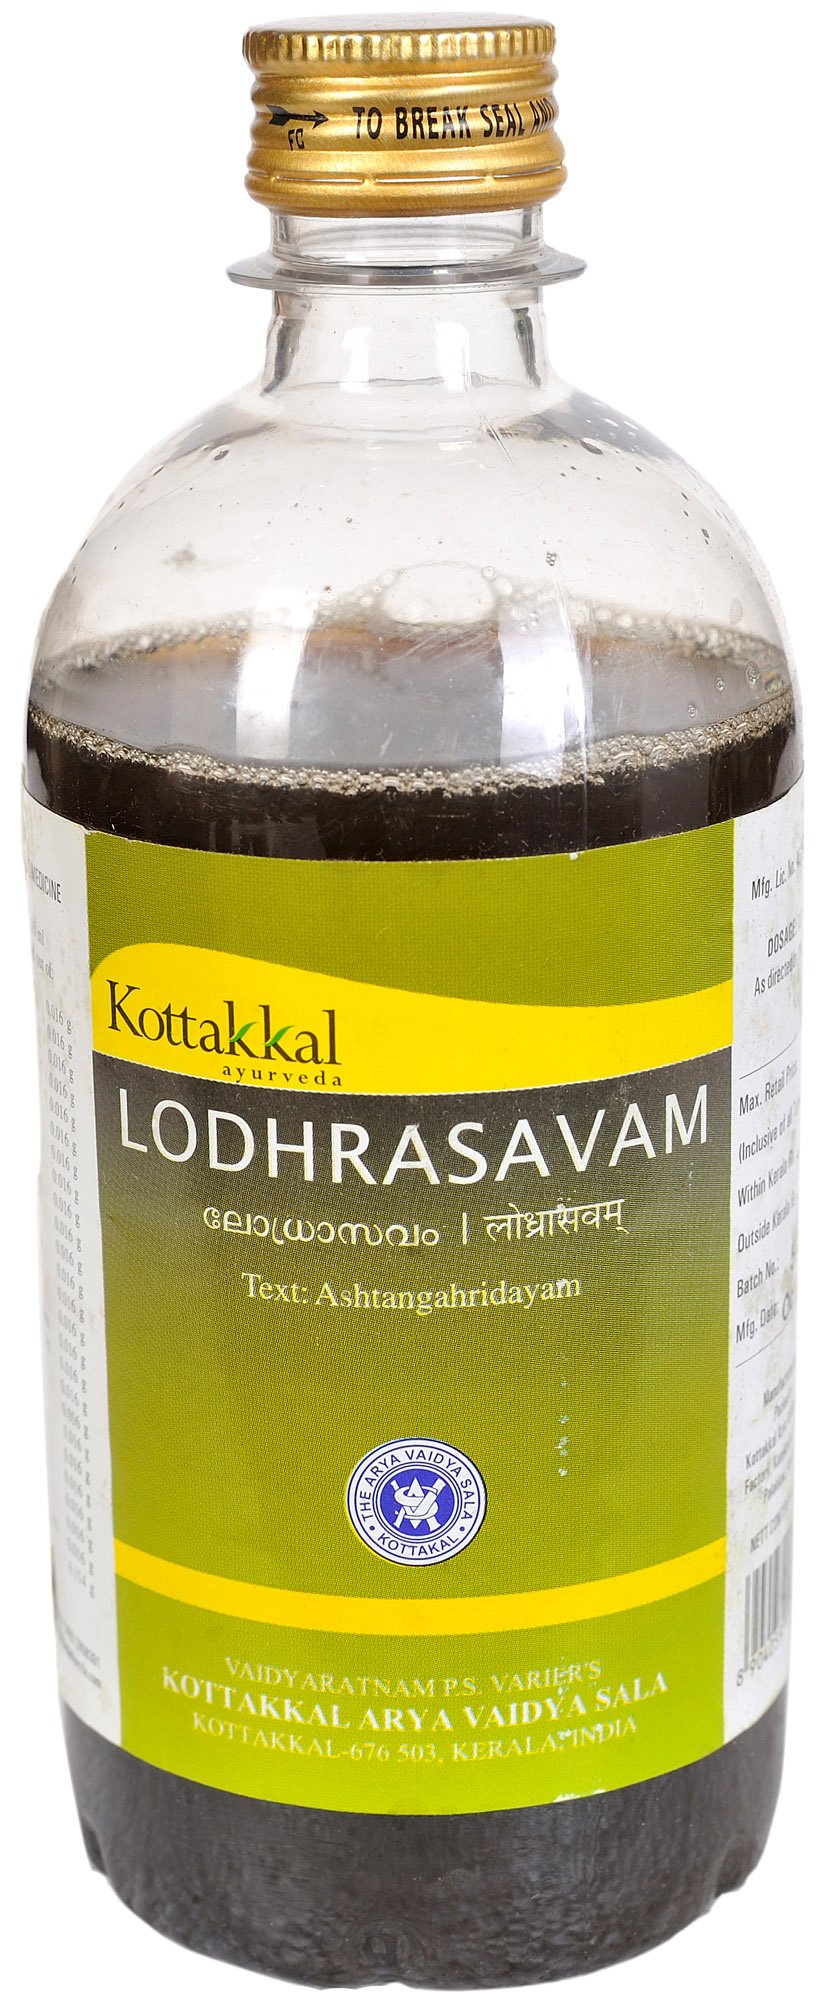 Lodhrasavam - book cover